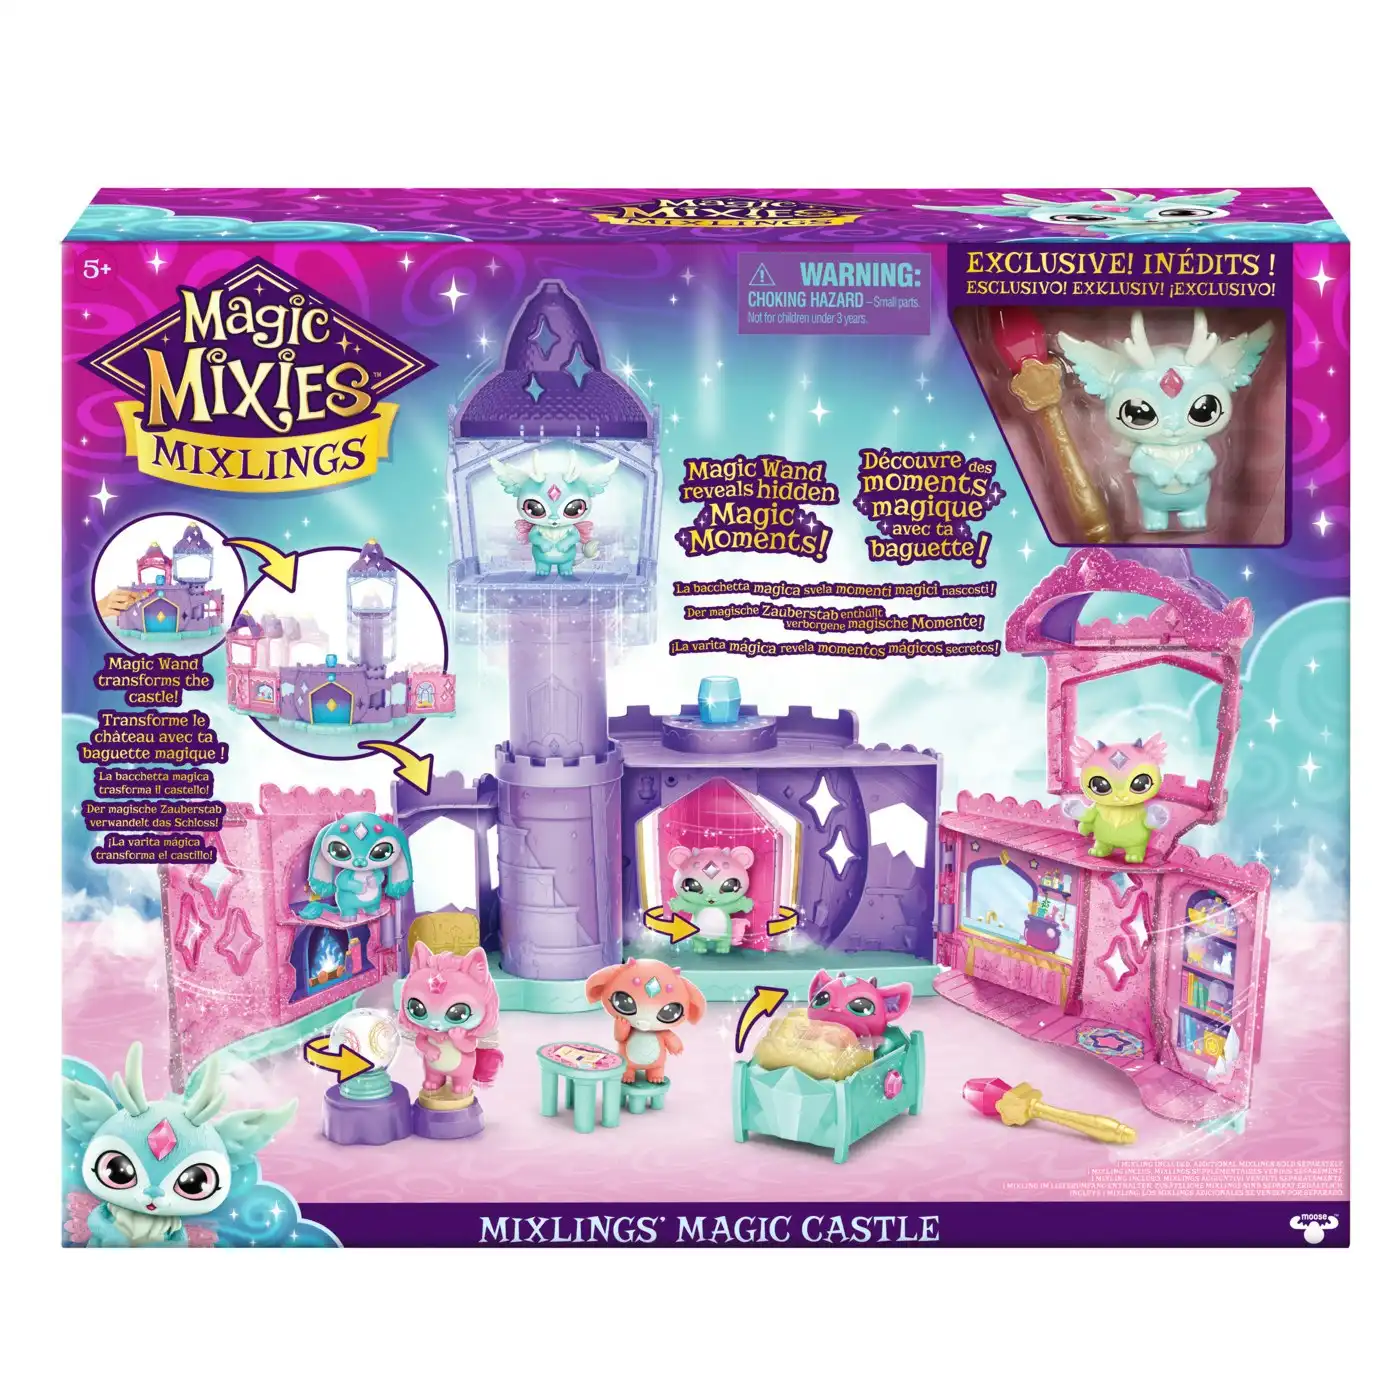 Magic Mixies - Magic Mixies Mixlings Magic Castle Playset